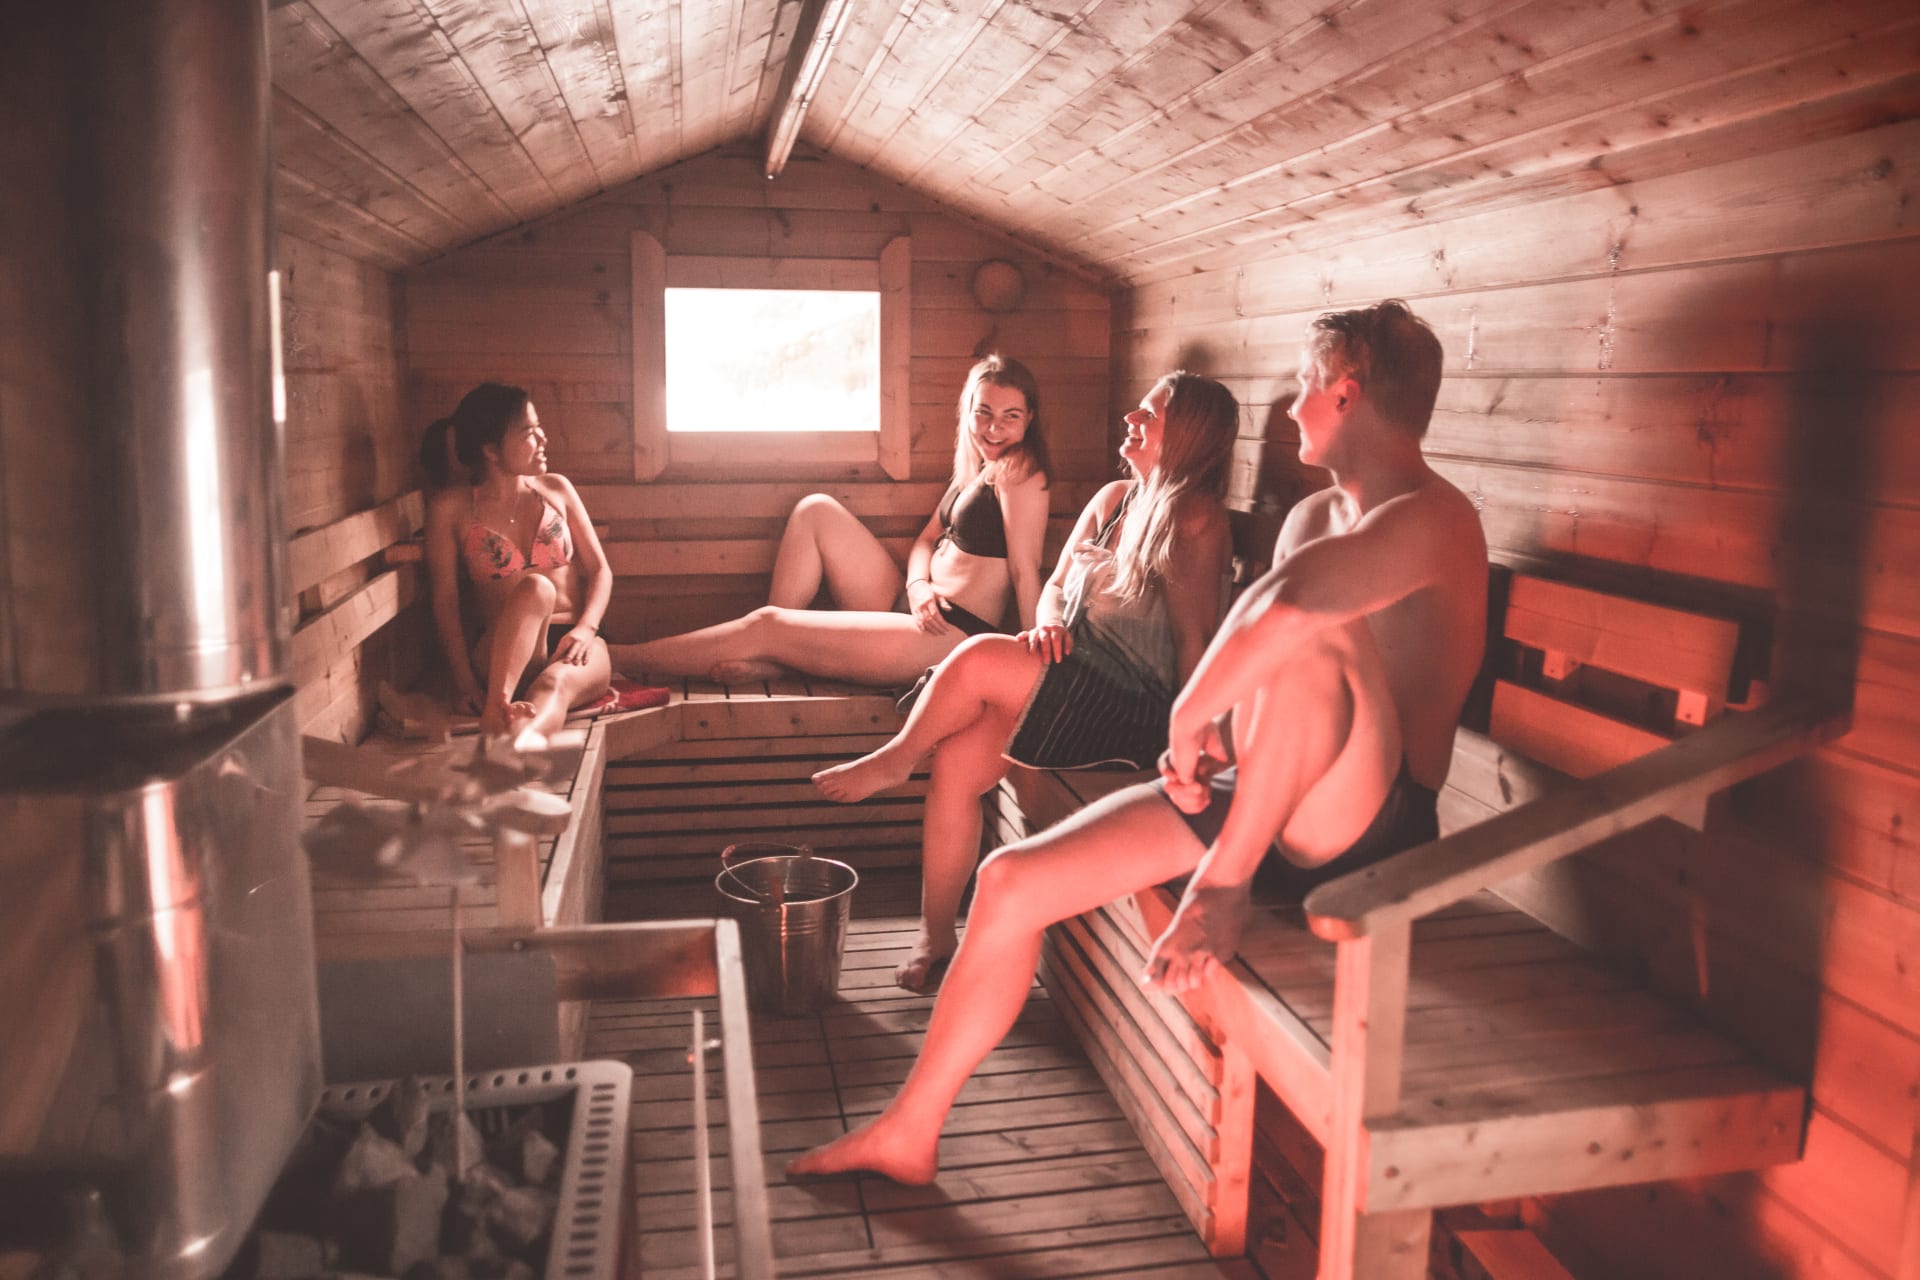 People in sauna